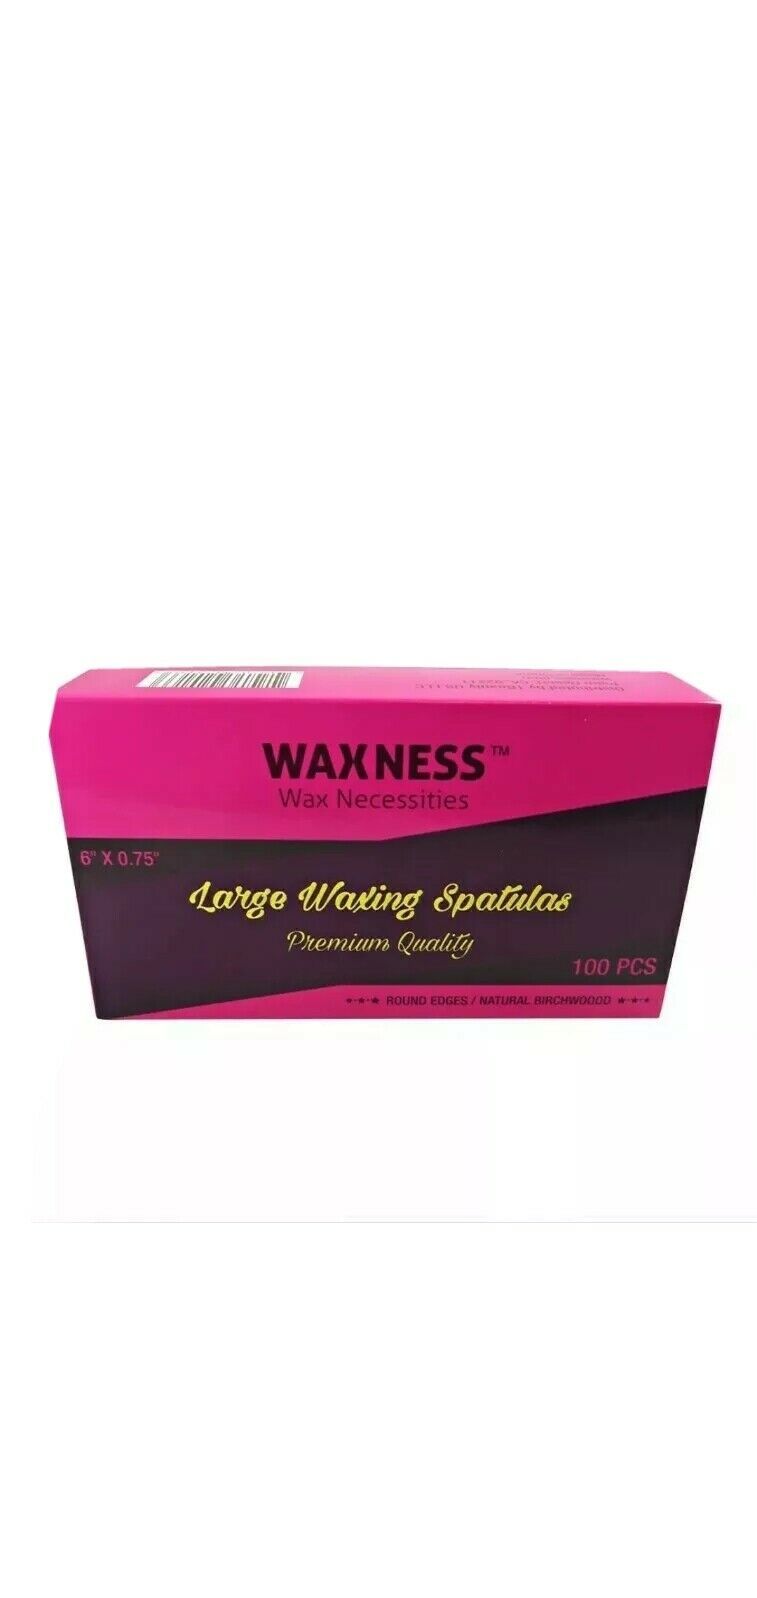 Waxness Wax Necessities Body Wax Spatulas 100pk (Tongue depressors type)